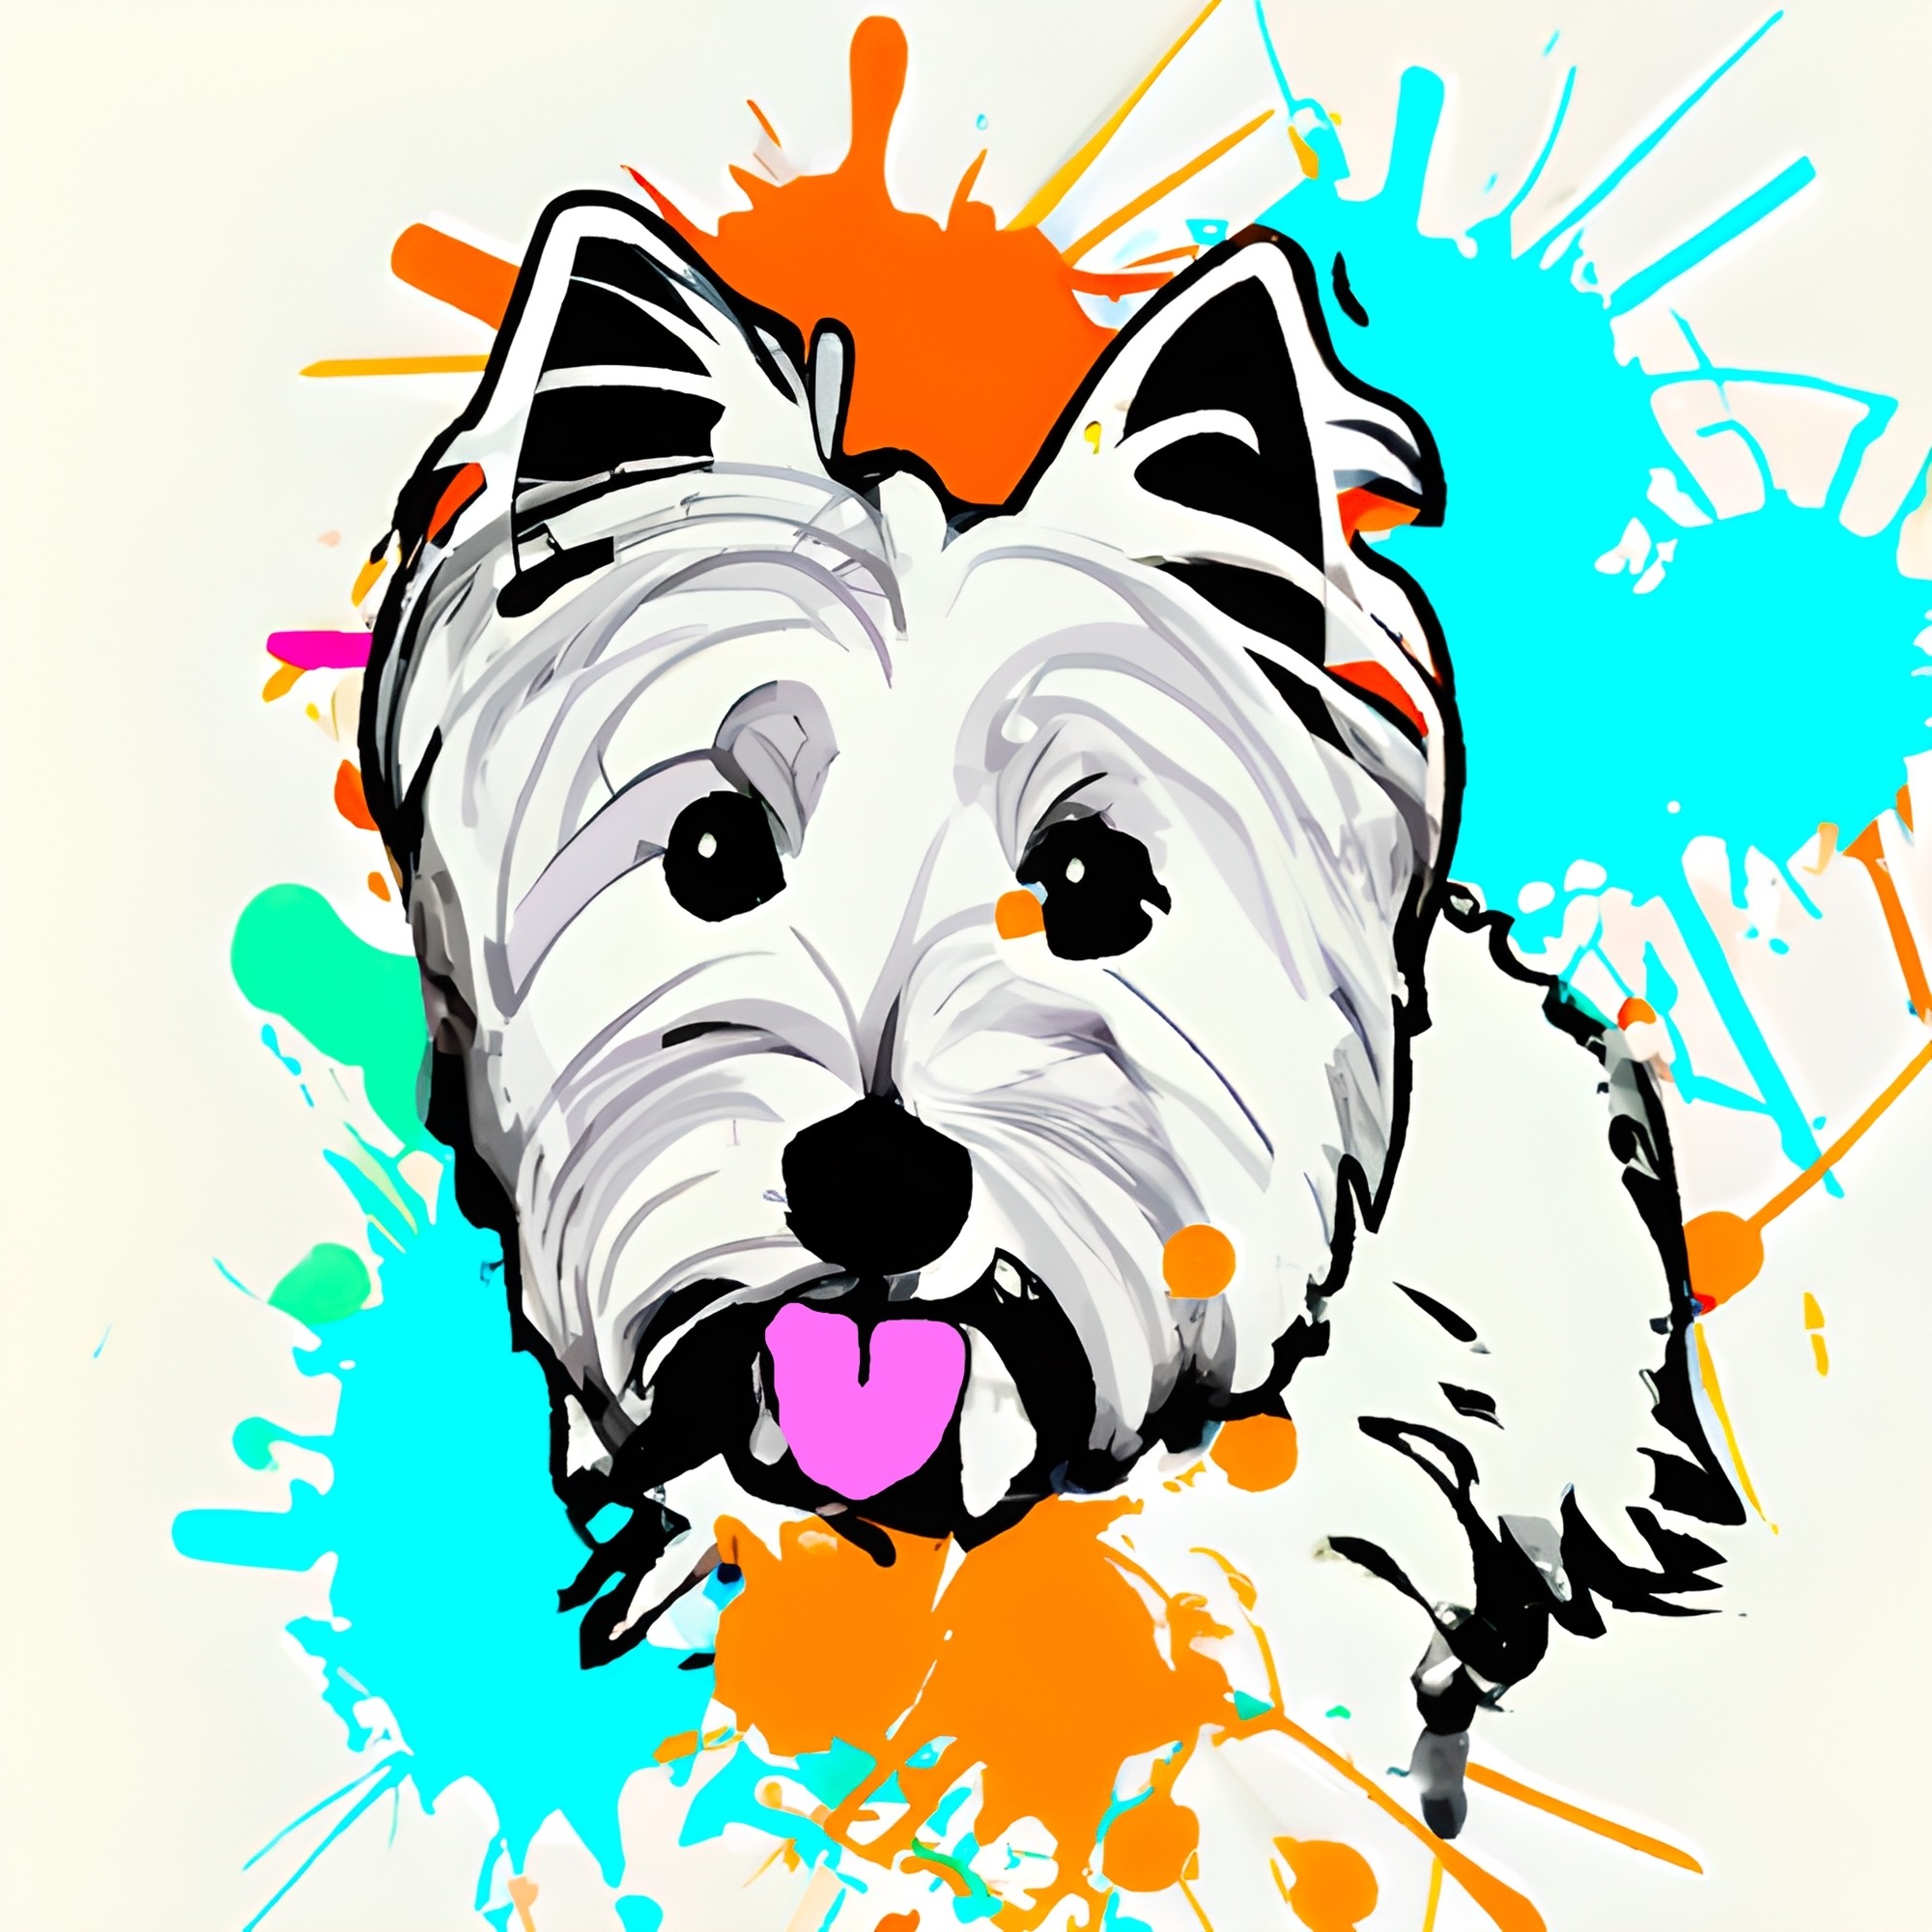 West Highland Terrier Dog Splash Art Cartoon Square Blank Card